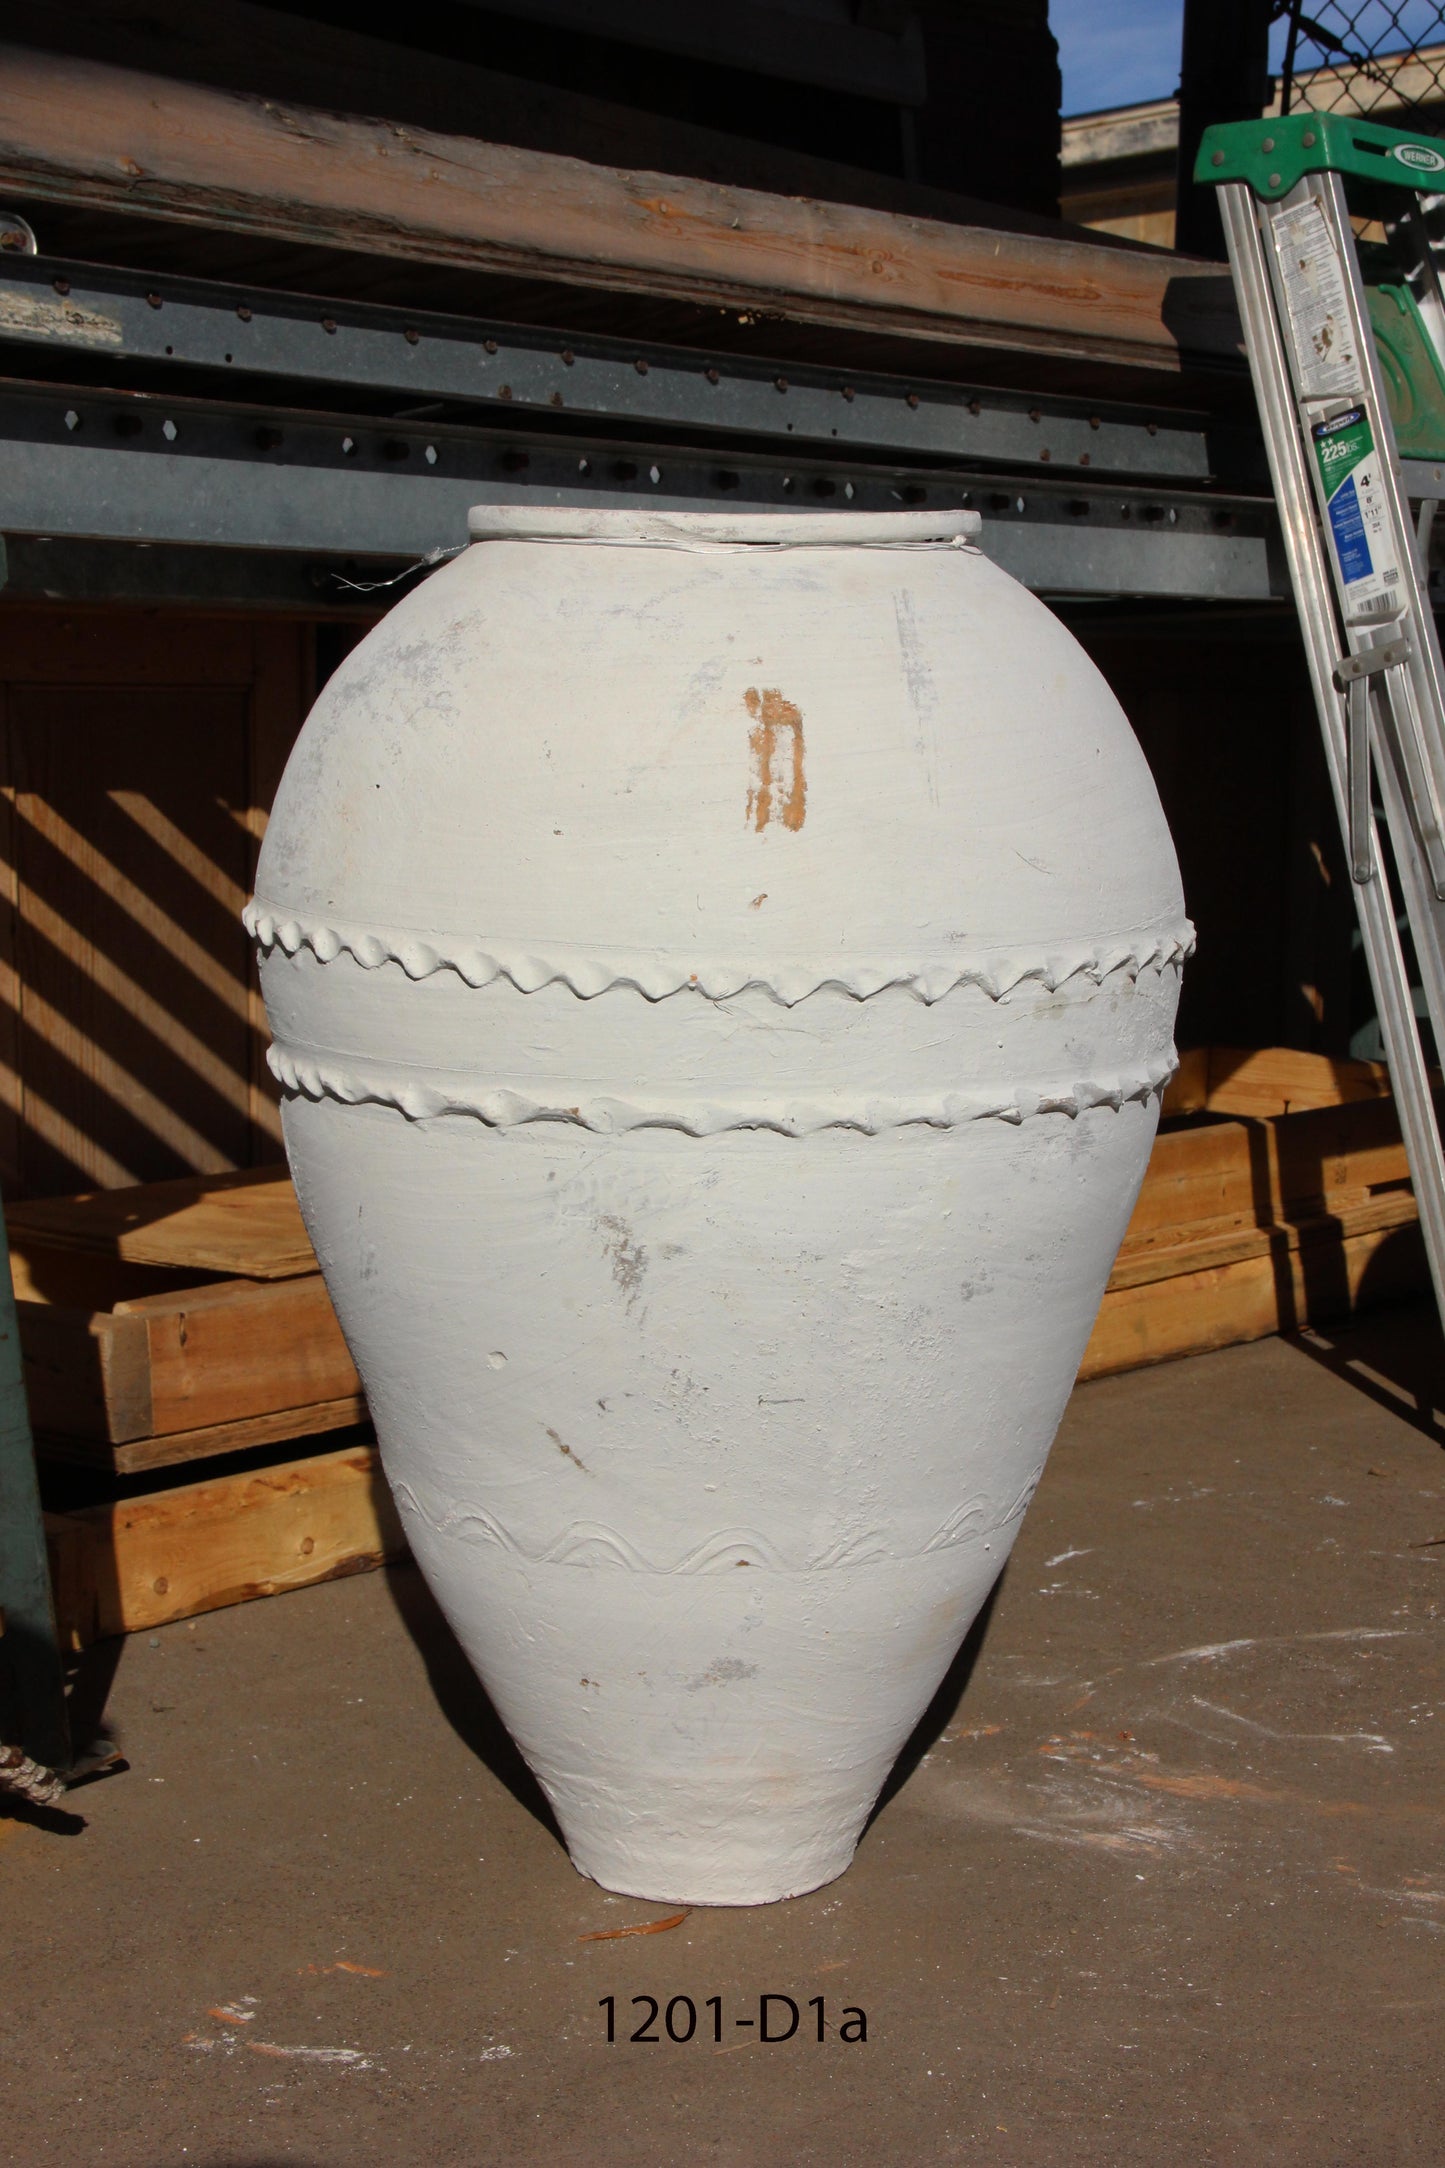 White Turkish Pots- New Inventory